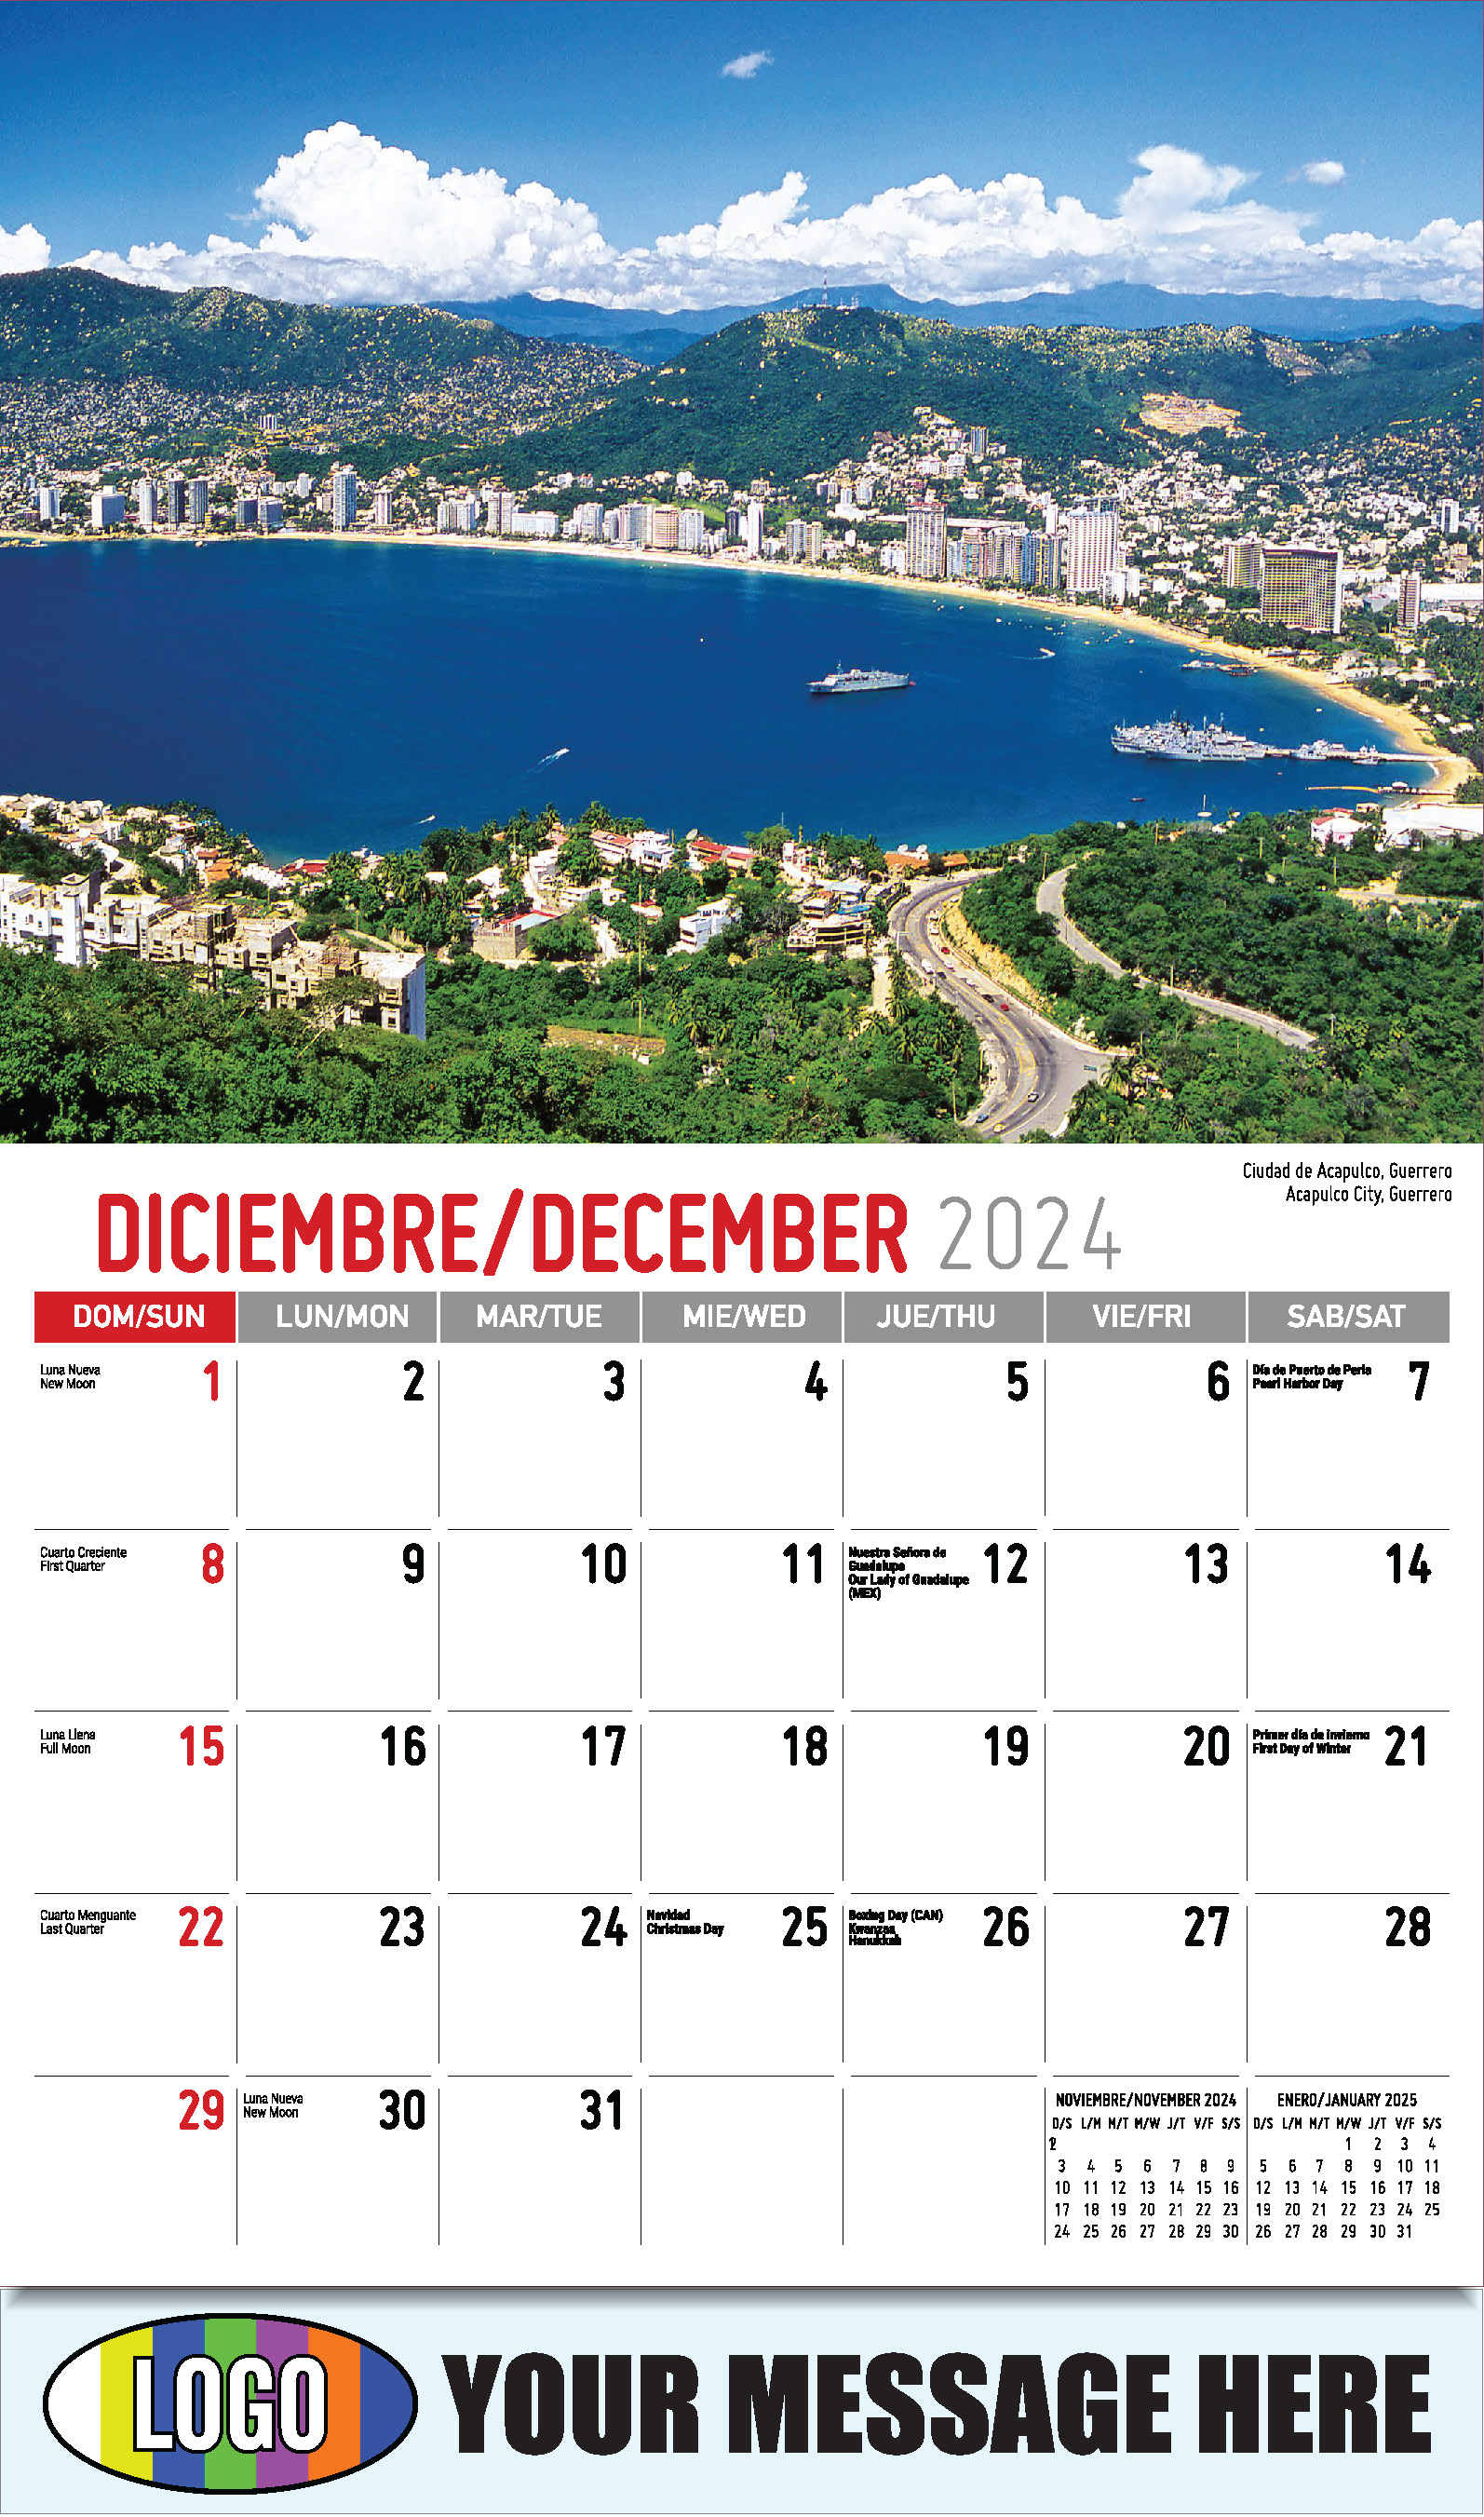 Scenes of Mexico 2025 Bilingual Business Promo Calendar - December